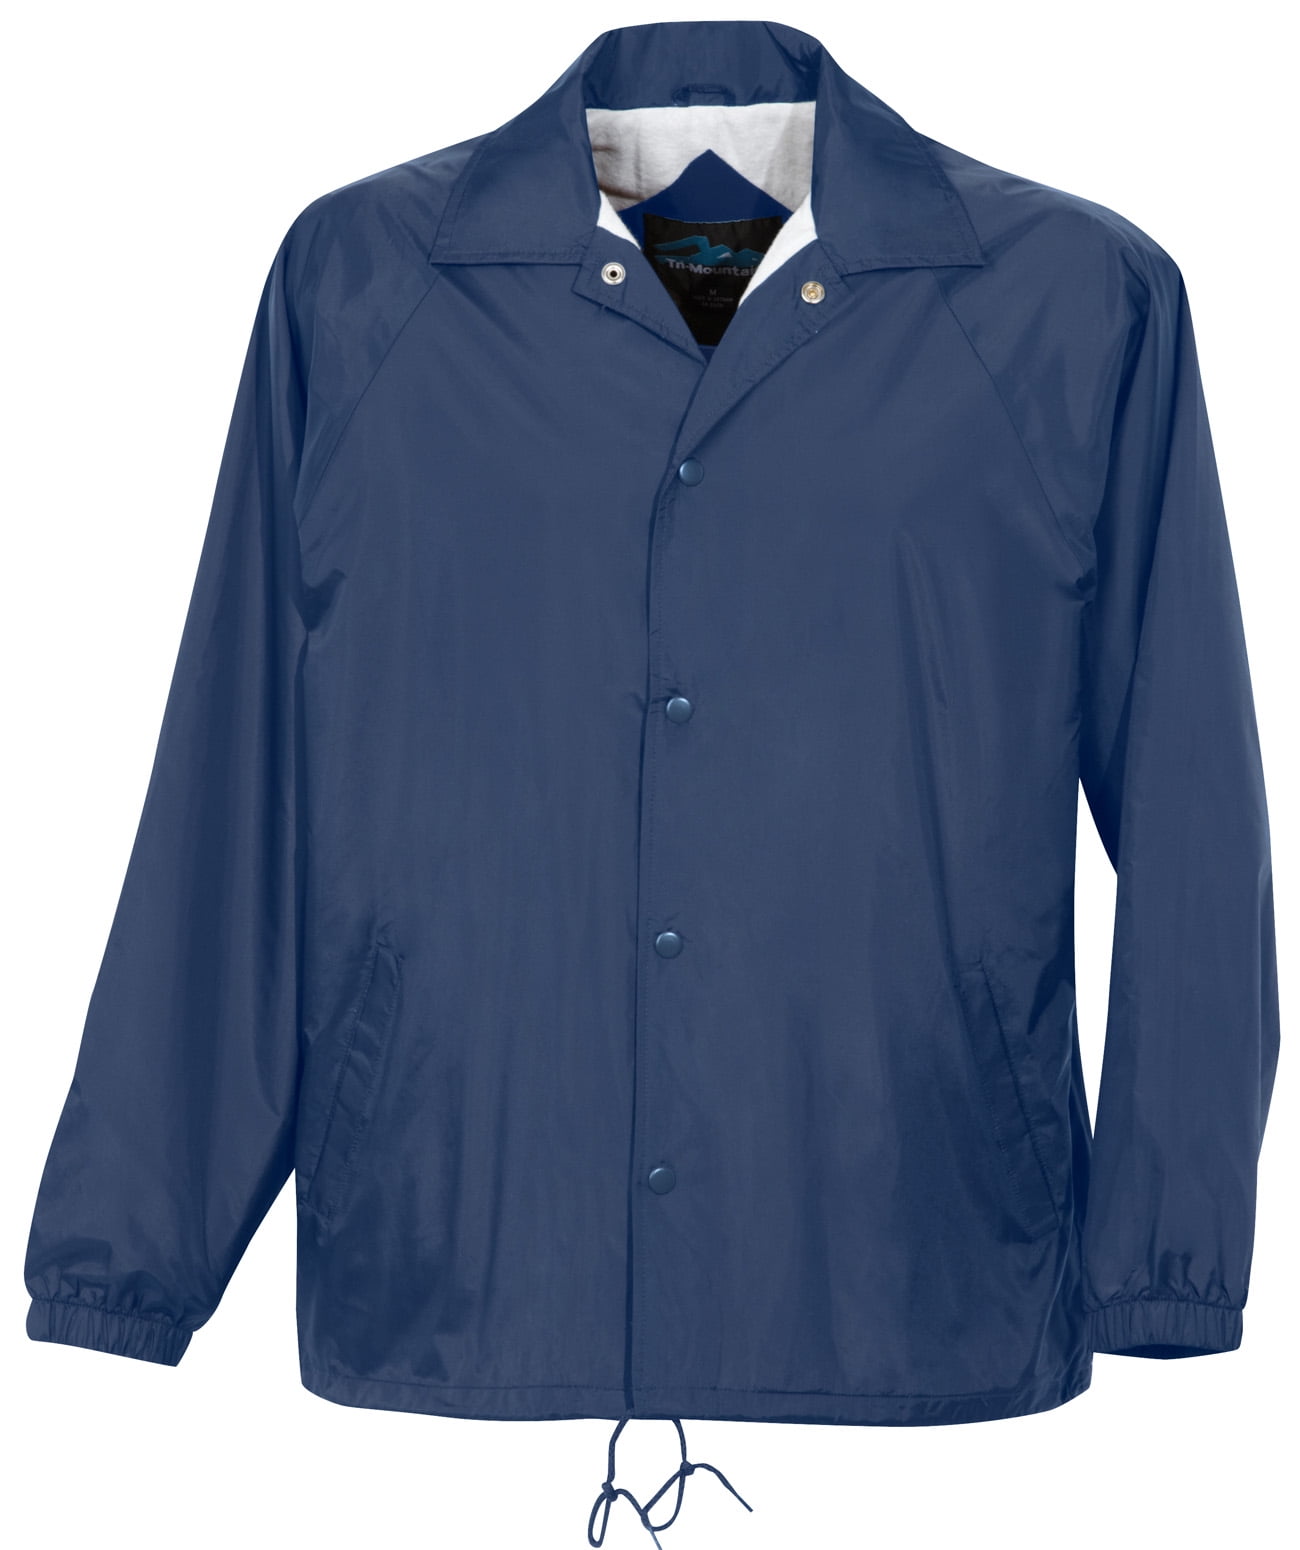 Tri-Mountain - Tri-Mountain Nylon Coach's Jacket With Flannel Lining ...